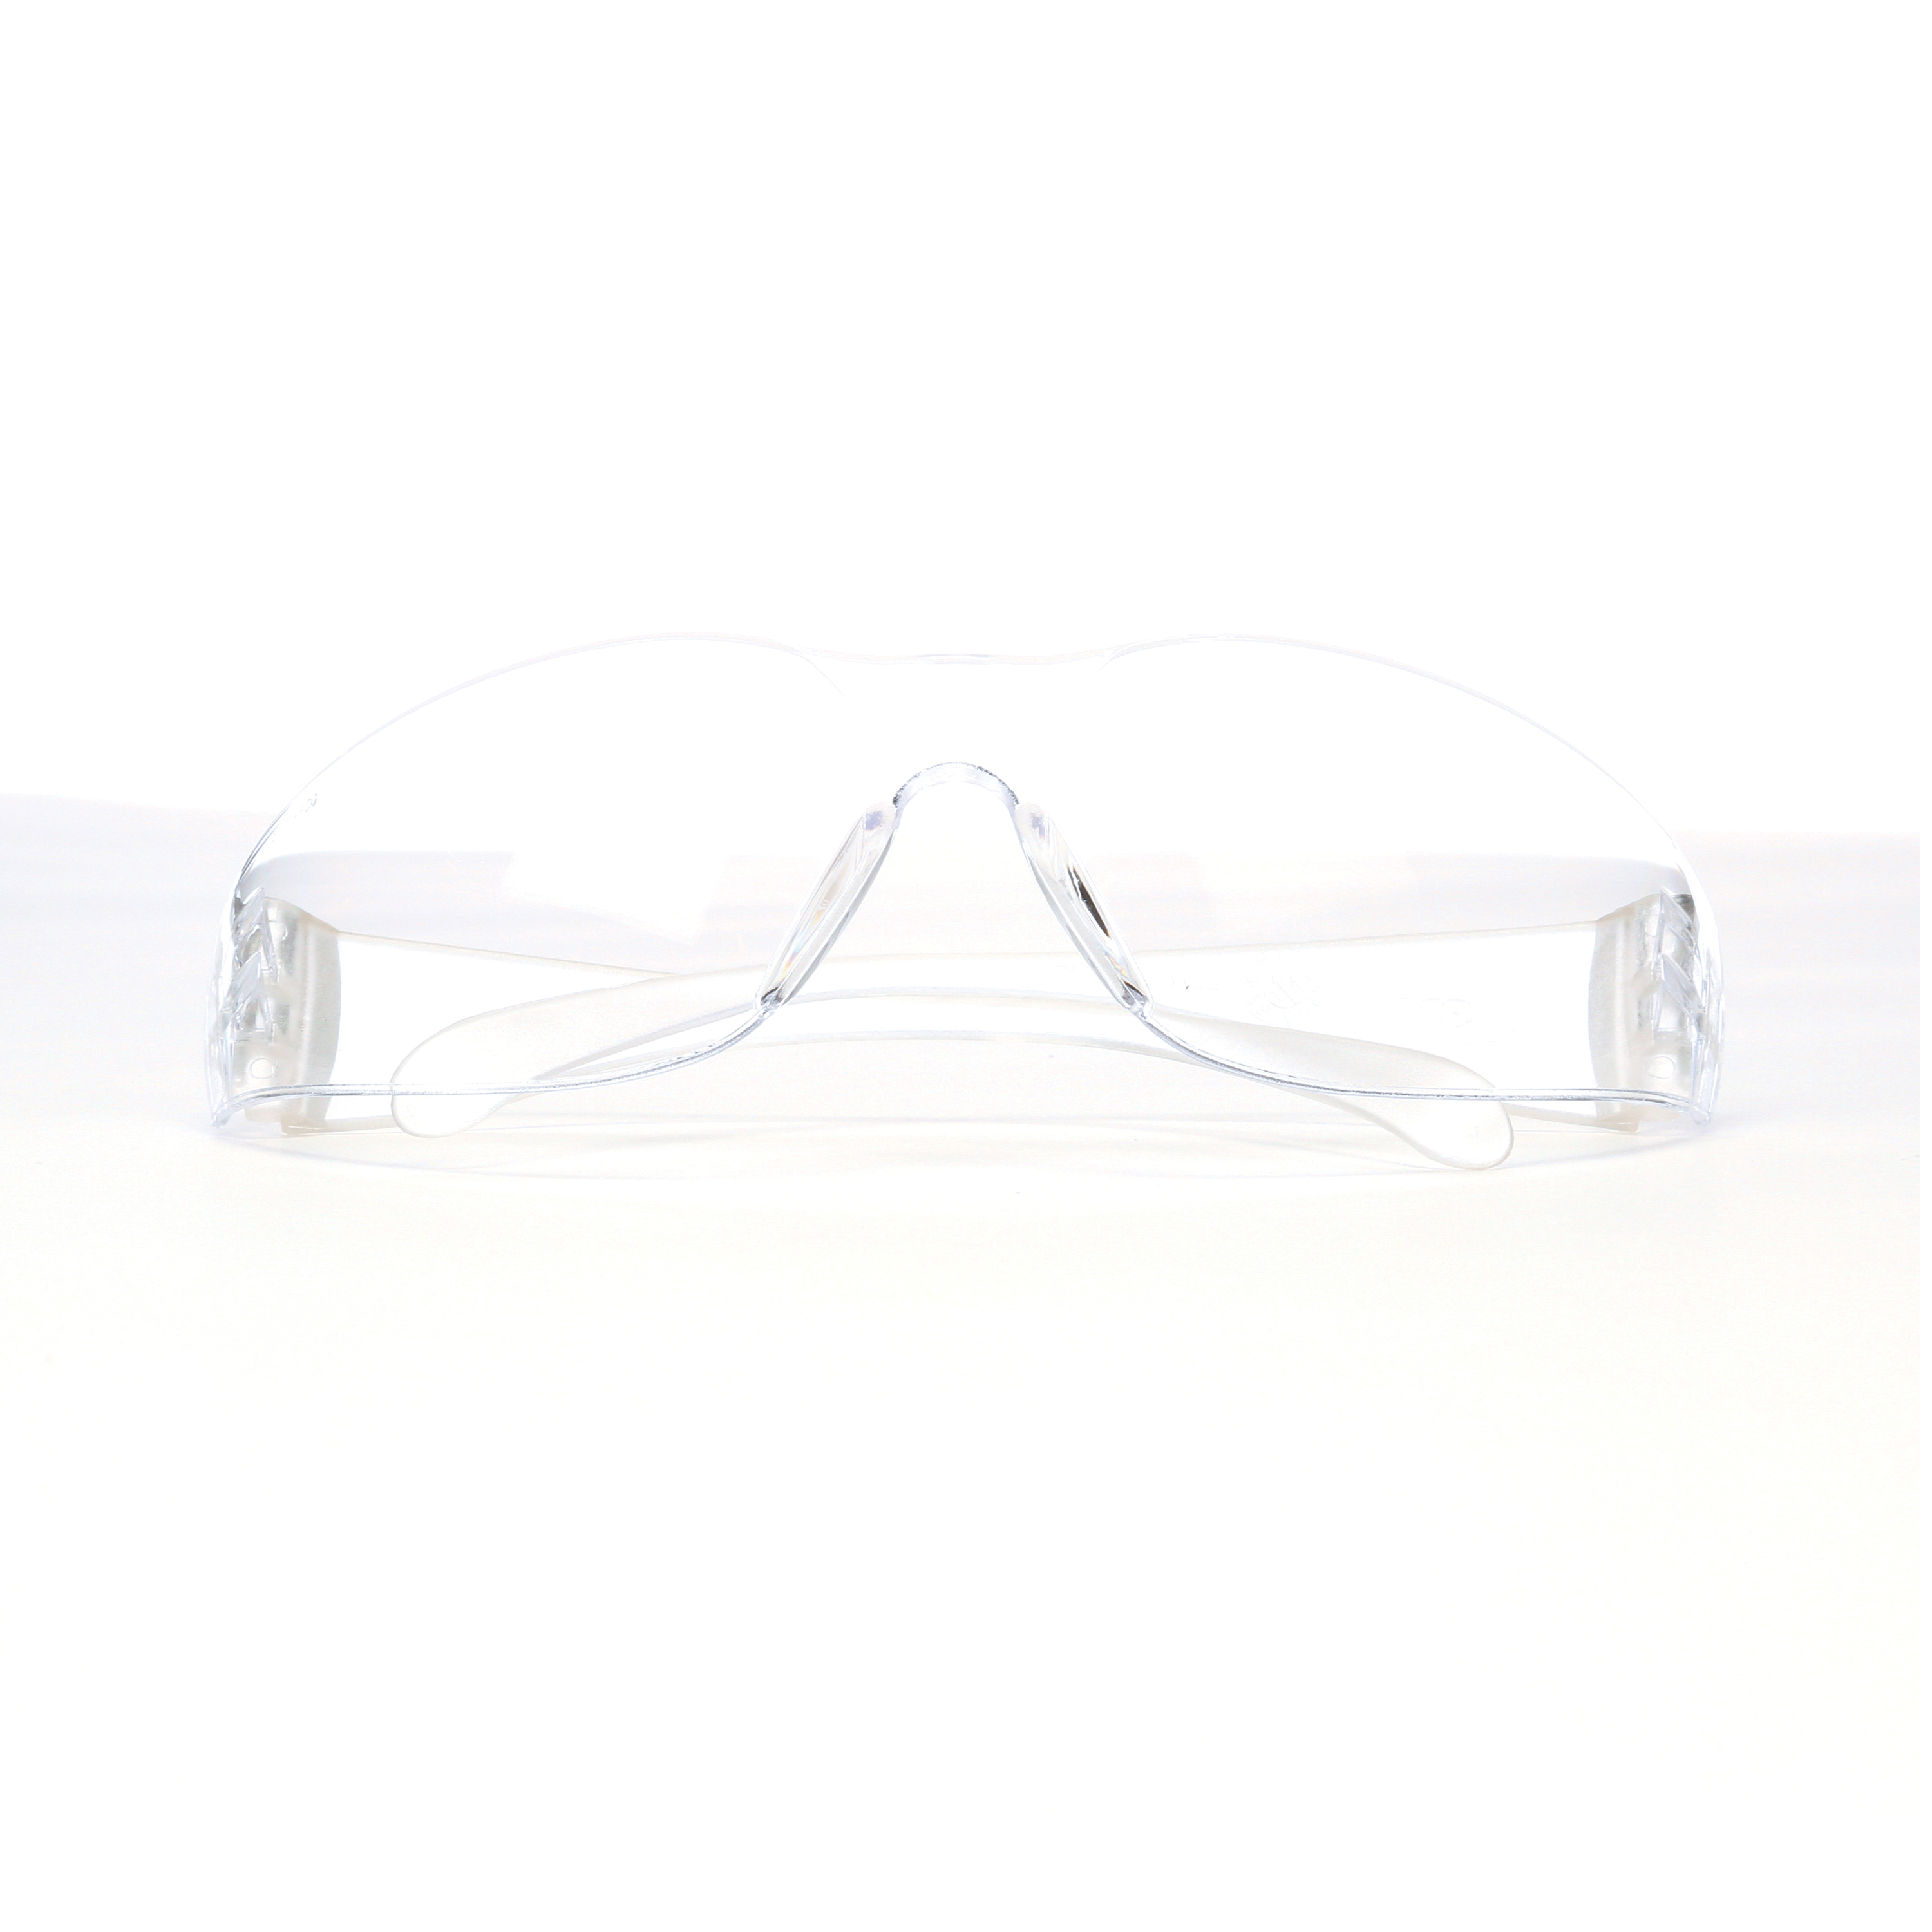 3M™ Virtua™ 078371-62105 Economy Lightweight Protective Eyewear, Anti-Fog, Clear Lens, Frameless/Wrap Around Frame, Clear, Polycarbonate Frame, Polycarbonate Lens, ANSI Z87.1-2015